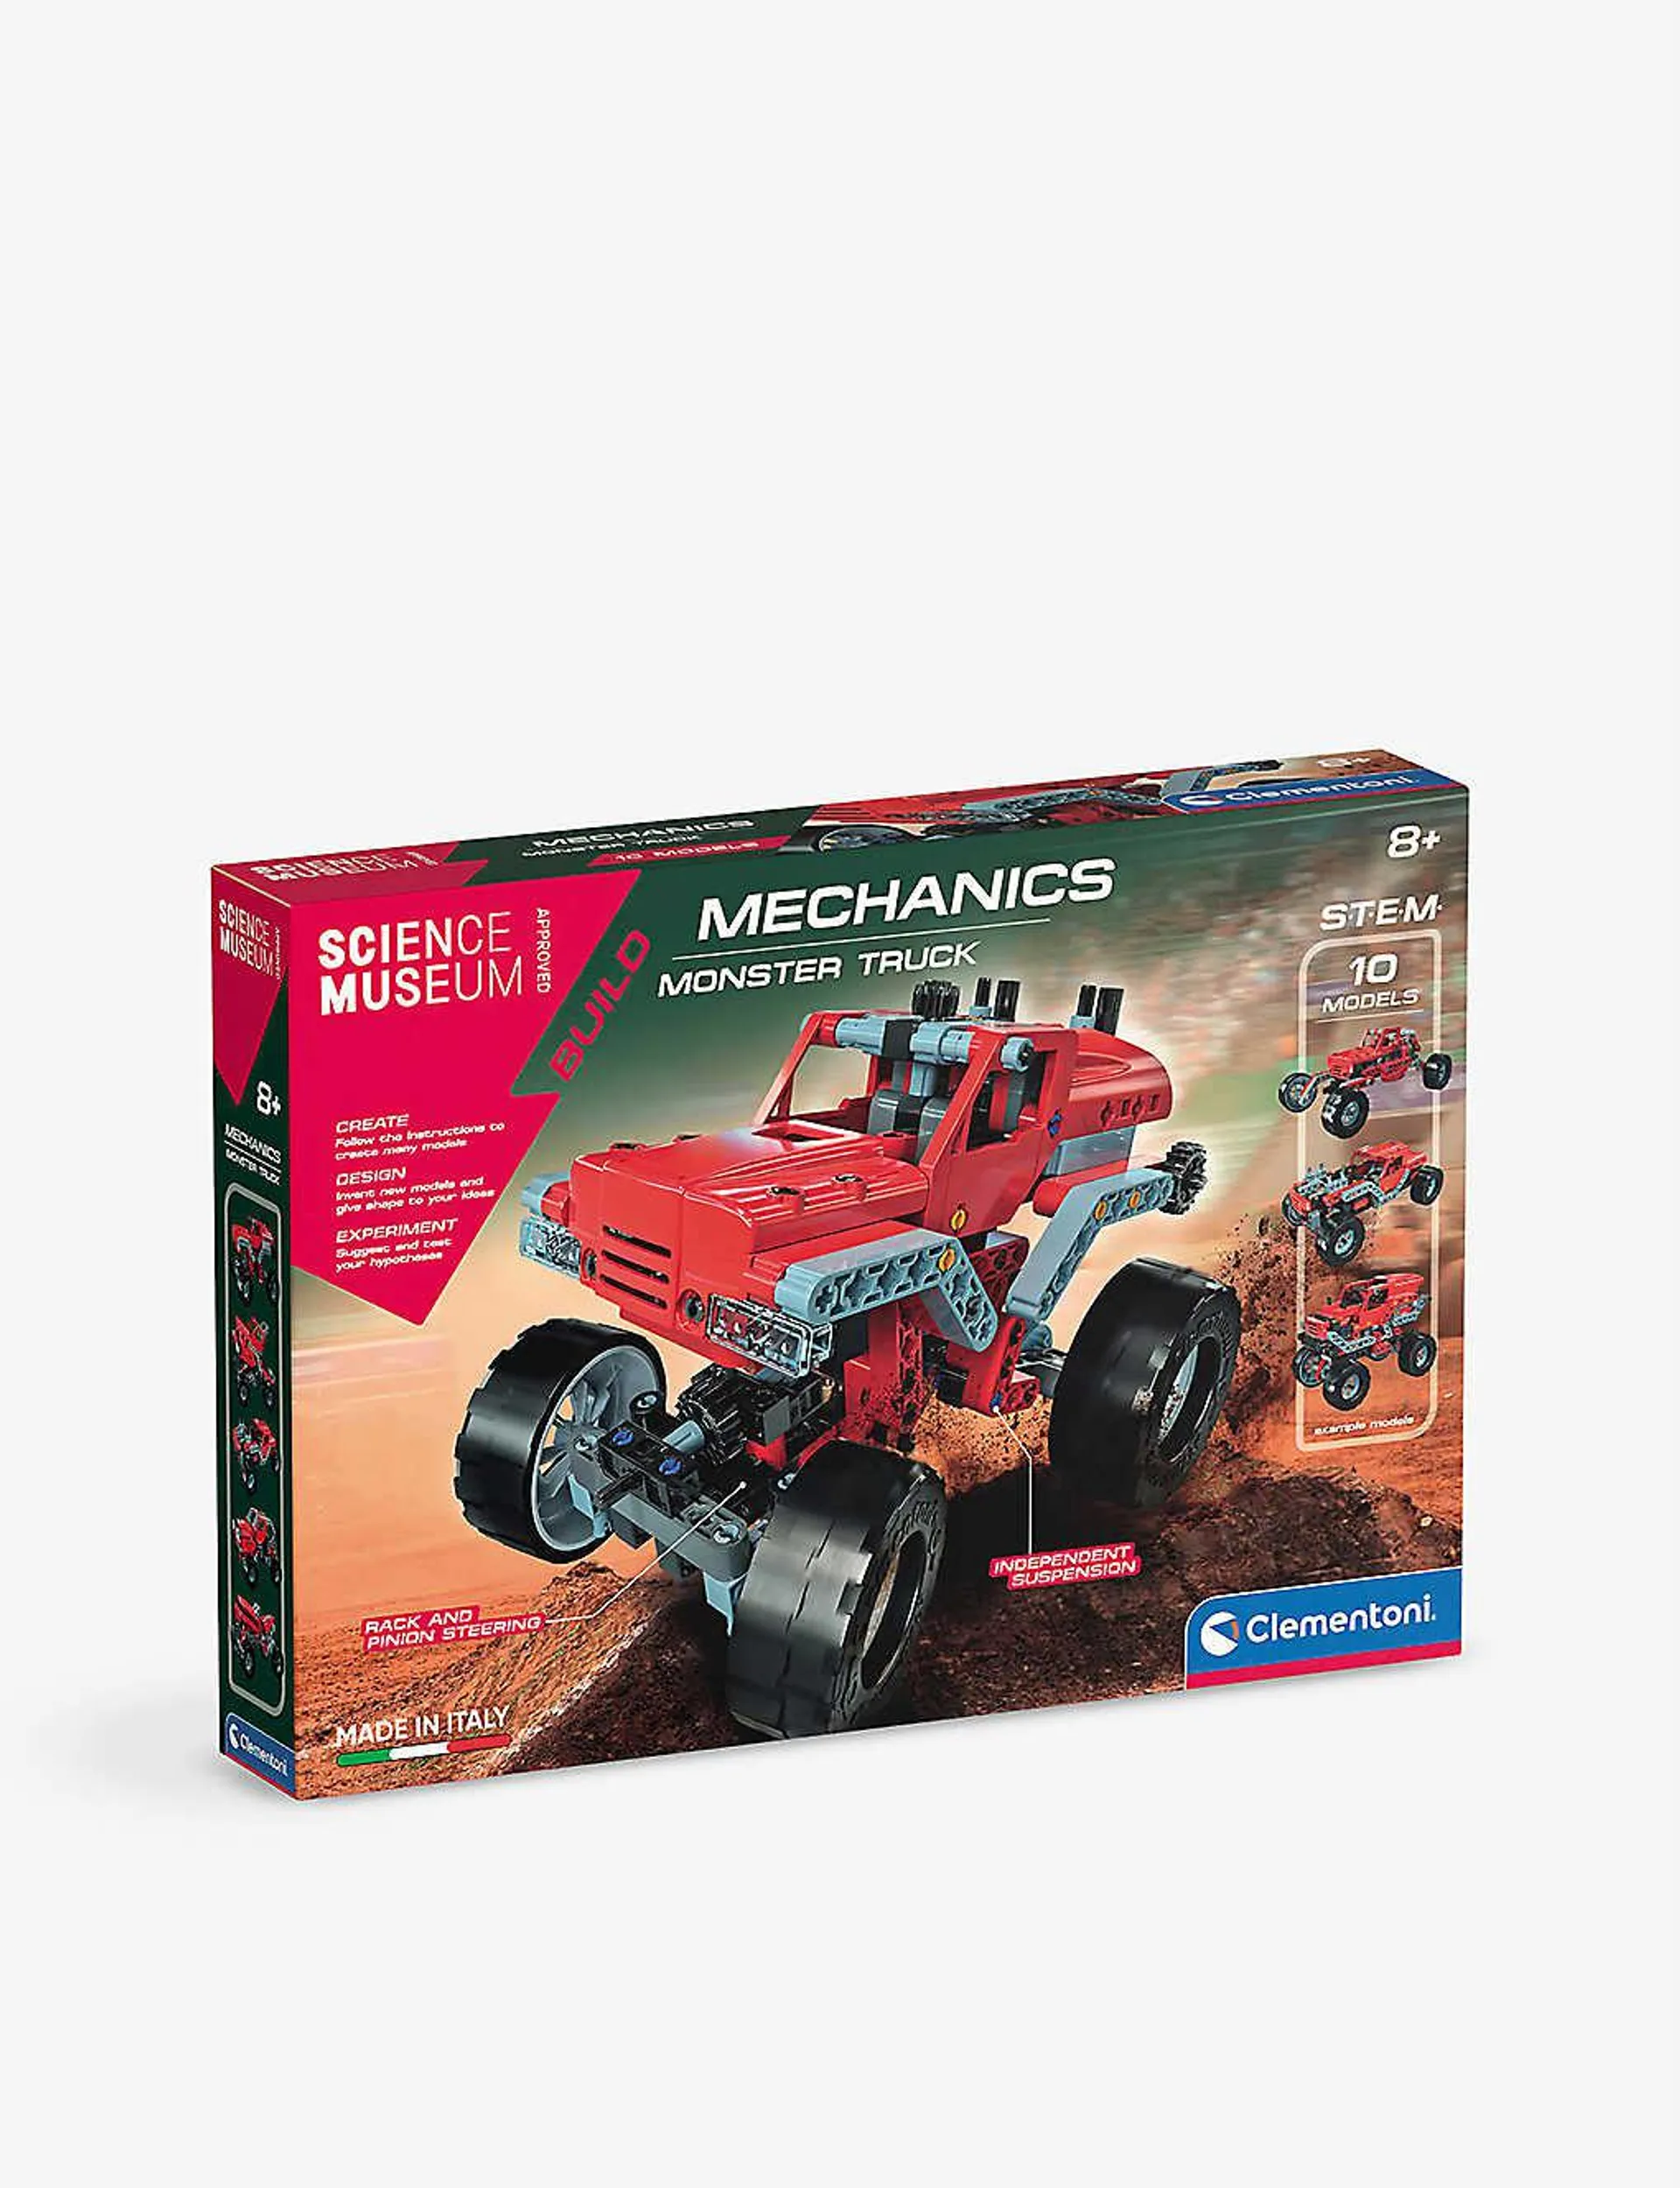 Clementoni Mechanics Laboratory Monster Truck assembly kit